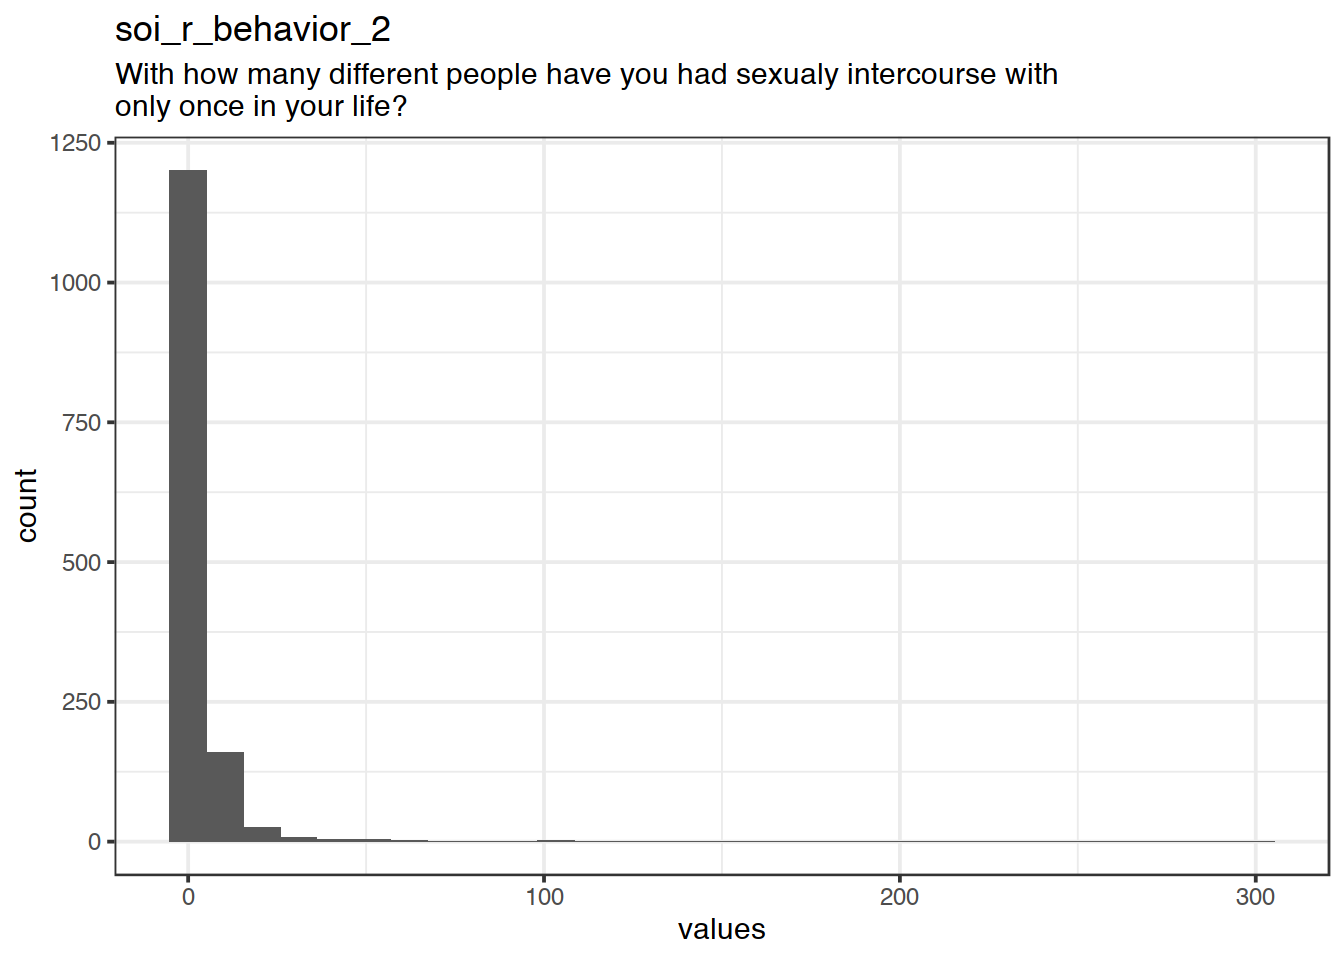 Distribution of values for soi_r_behavior_2